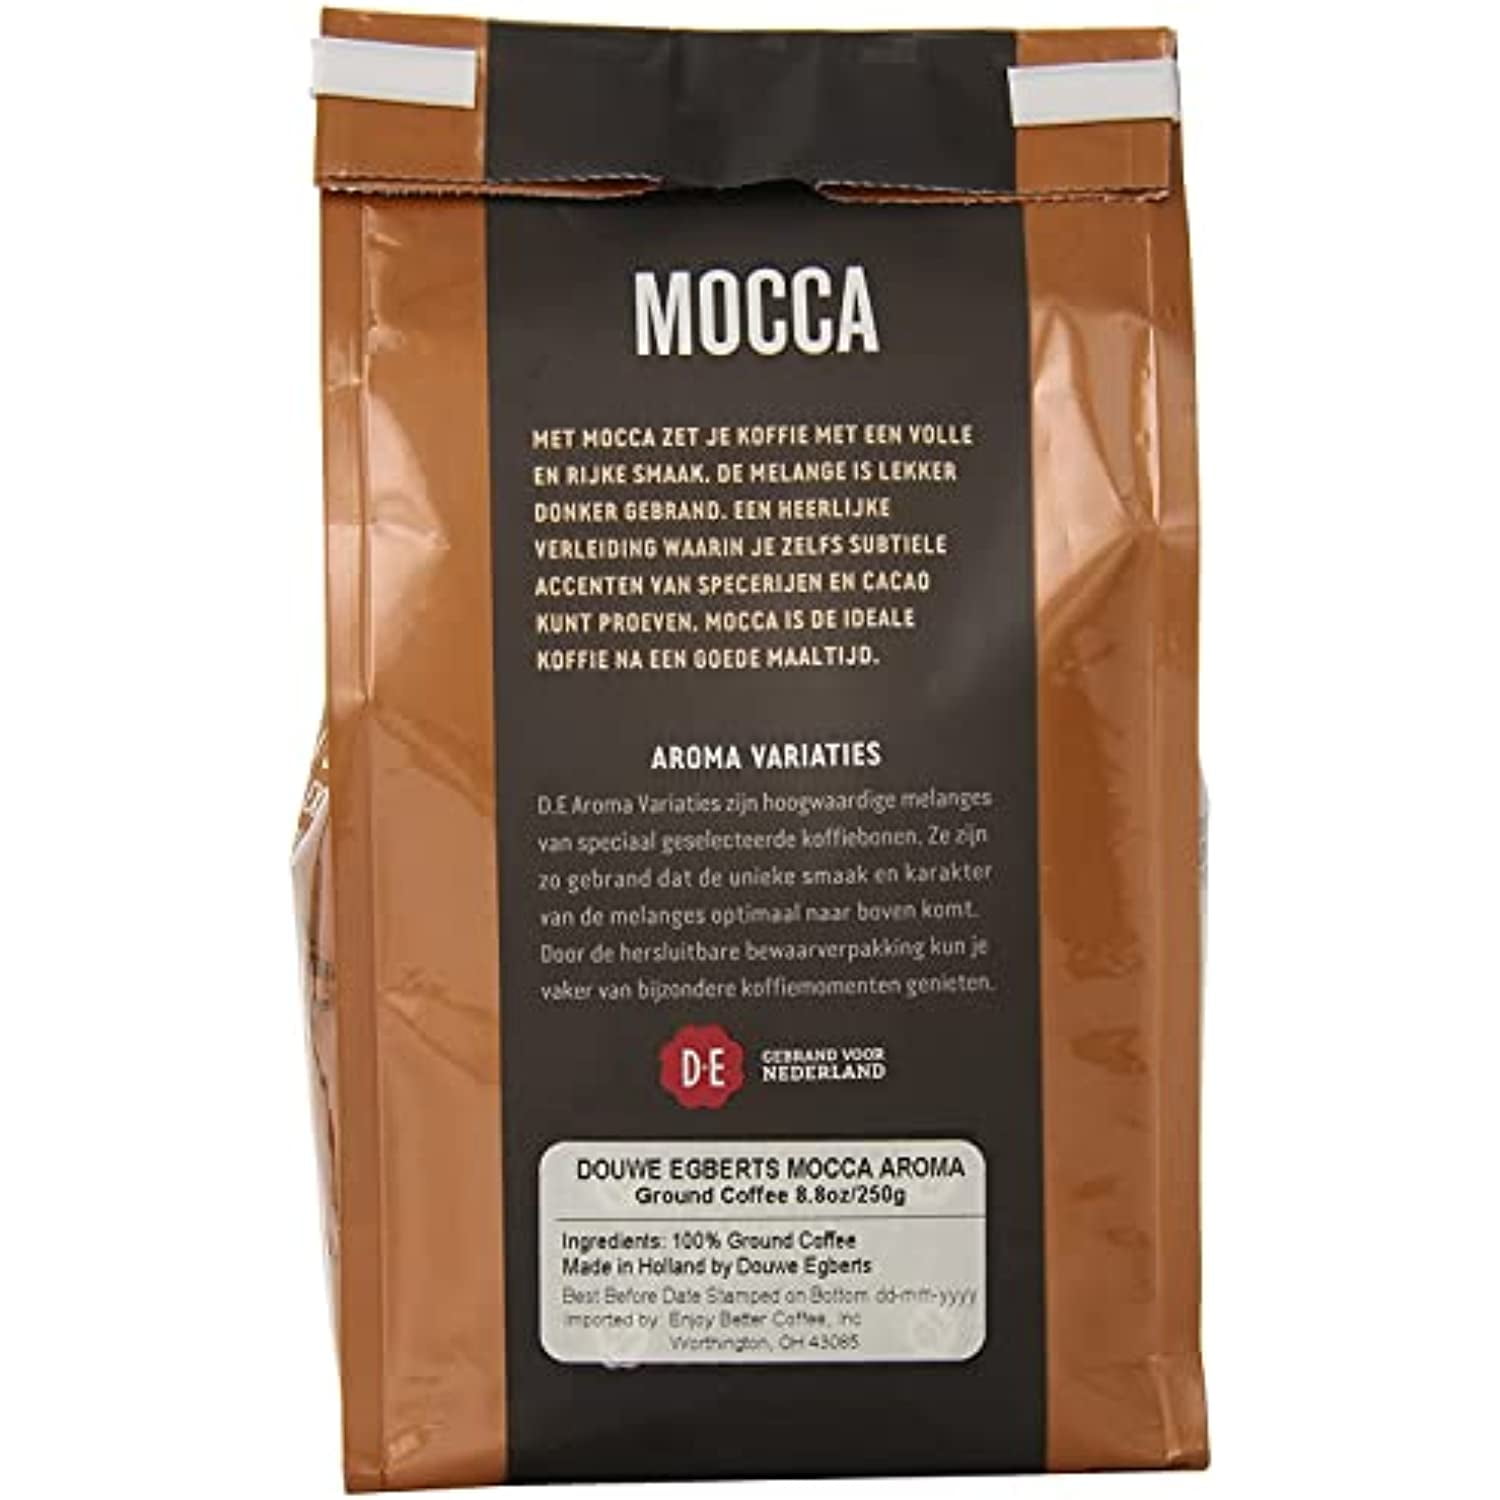 Douwe Egberts Aroma Variaties Mocca Vol & Rijk (Mocca Aroma Ground Coffee)  - 8.8Oz [12 Units] (8711000311462)